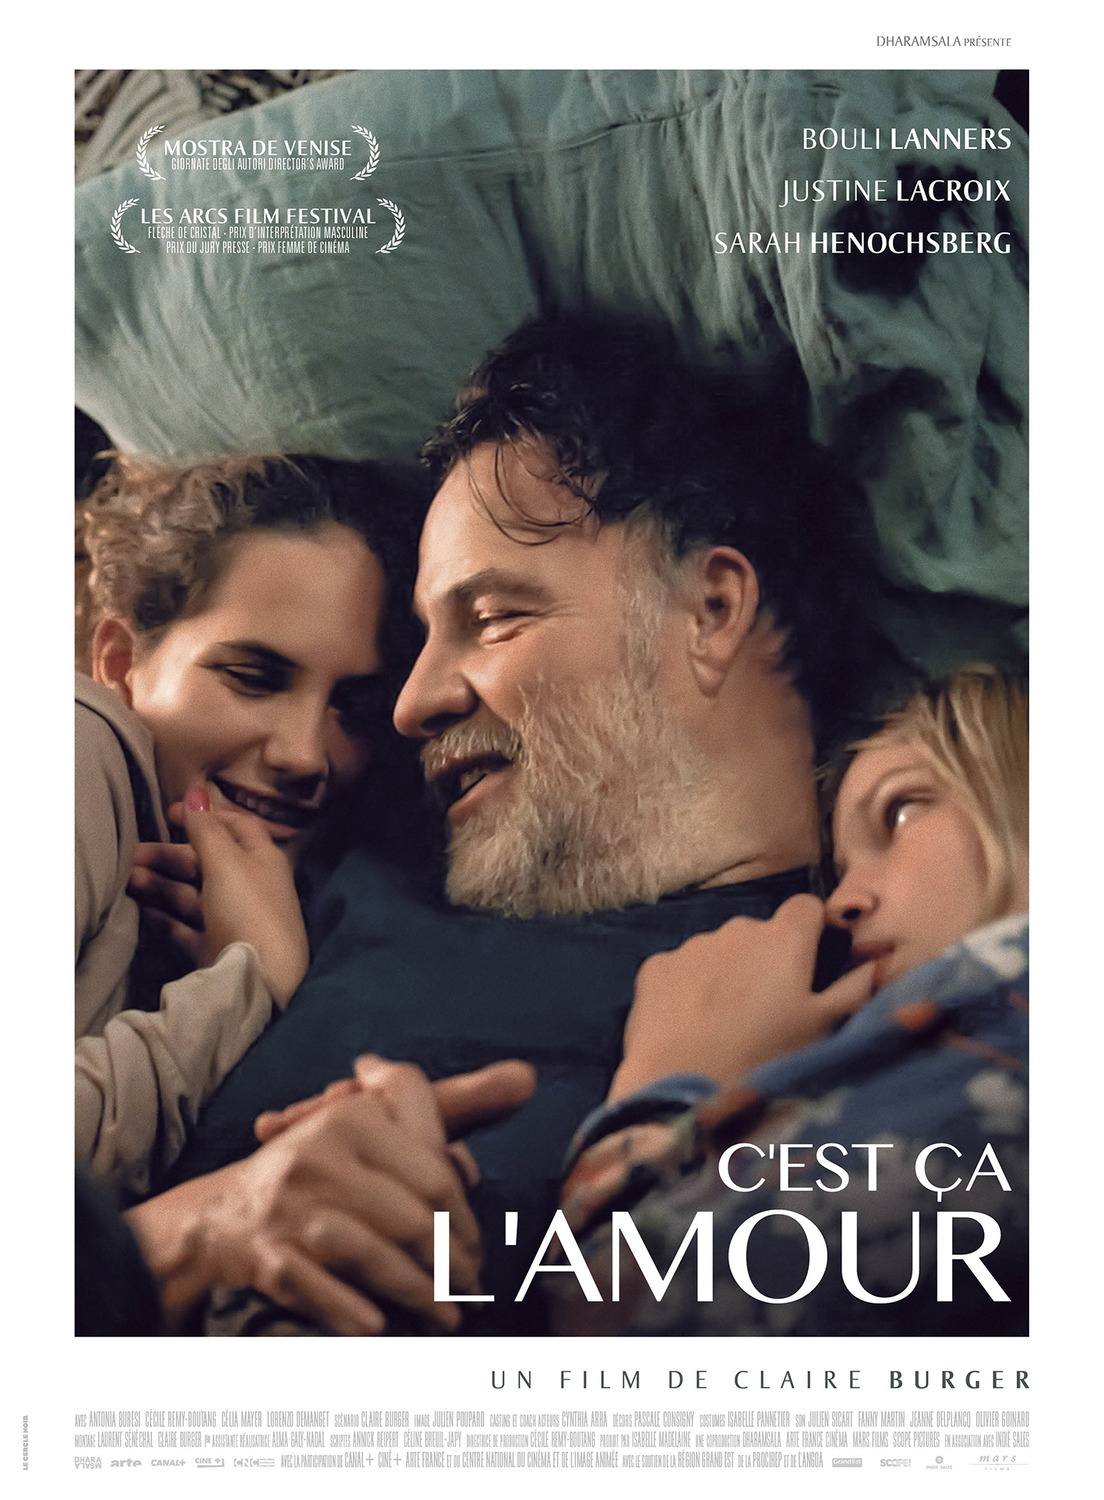 Extra Large Movie Poster Image for C'est ça l'amour 